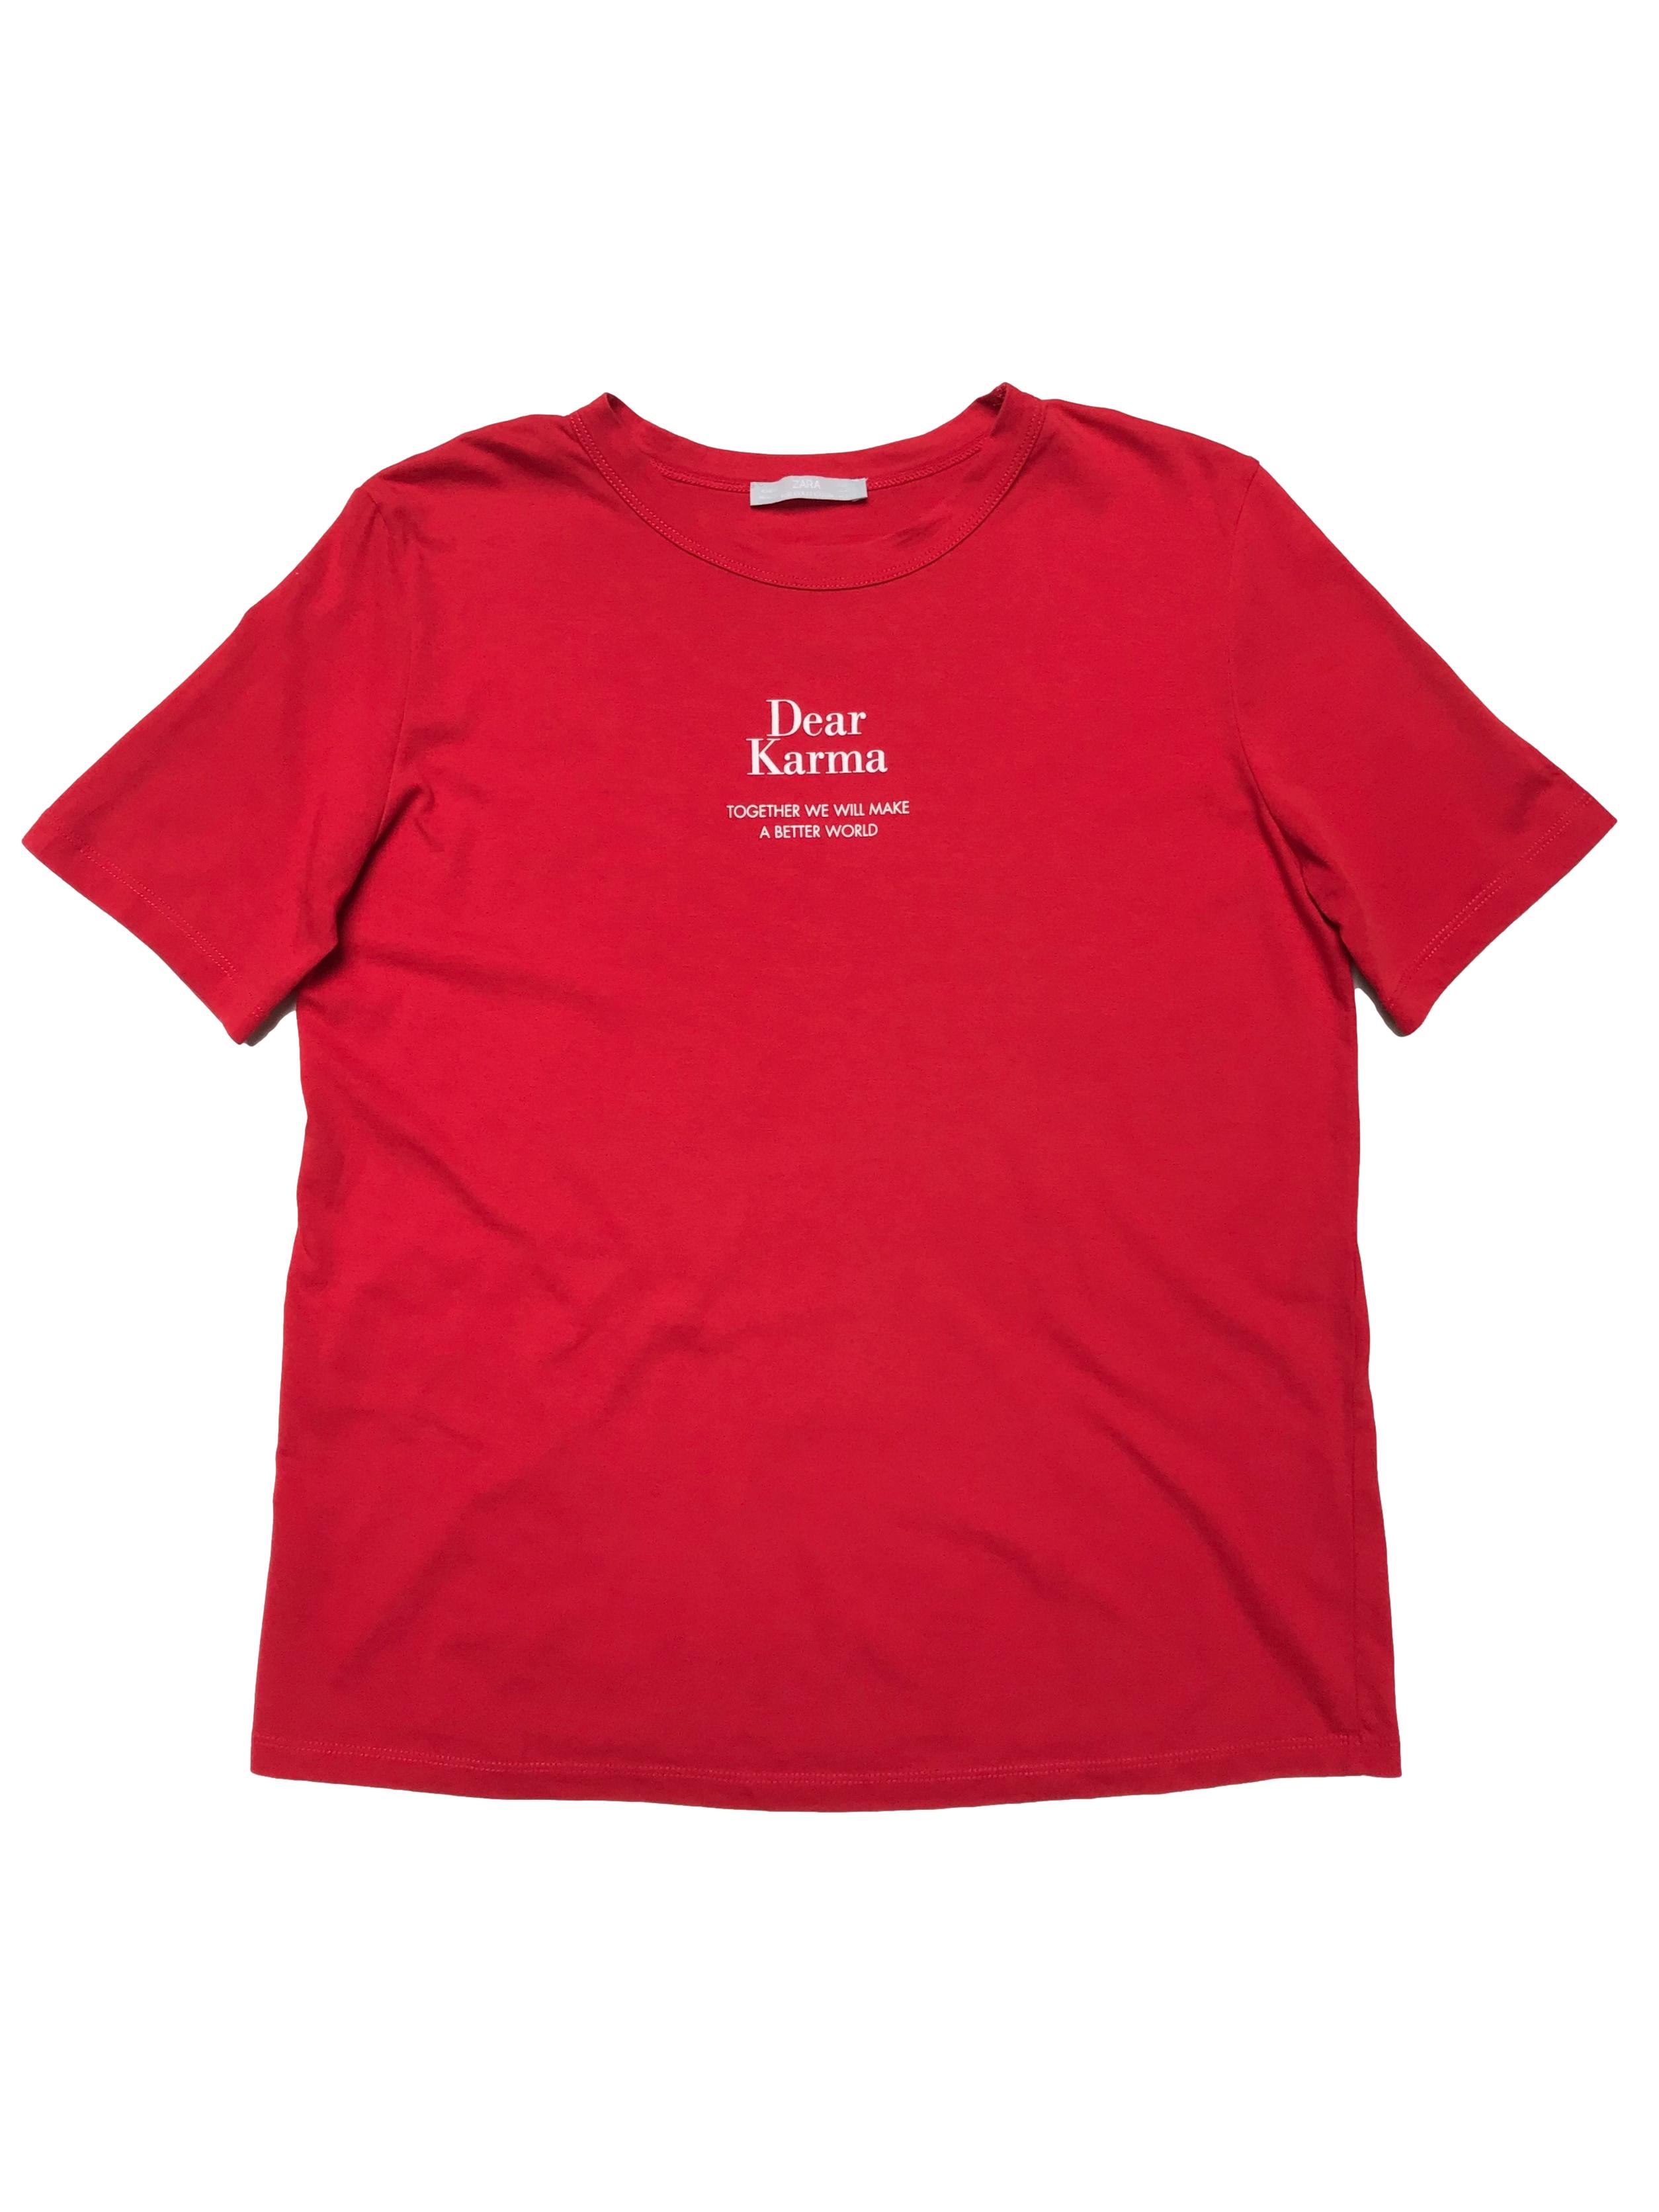 Camiseta oversize Zara roja 100% algodón con estampado "Dear karma". Busto 100cm Largo 59cm